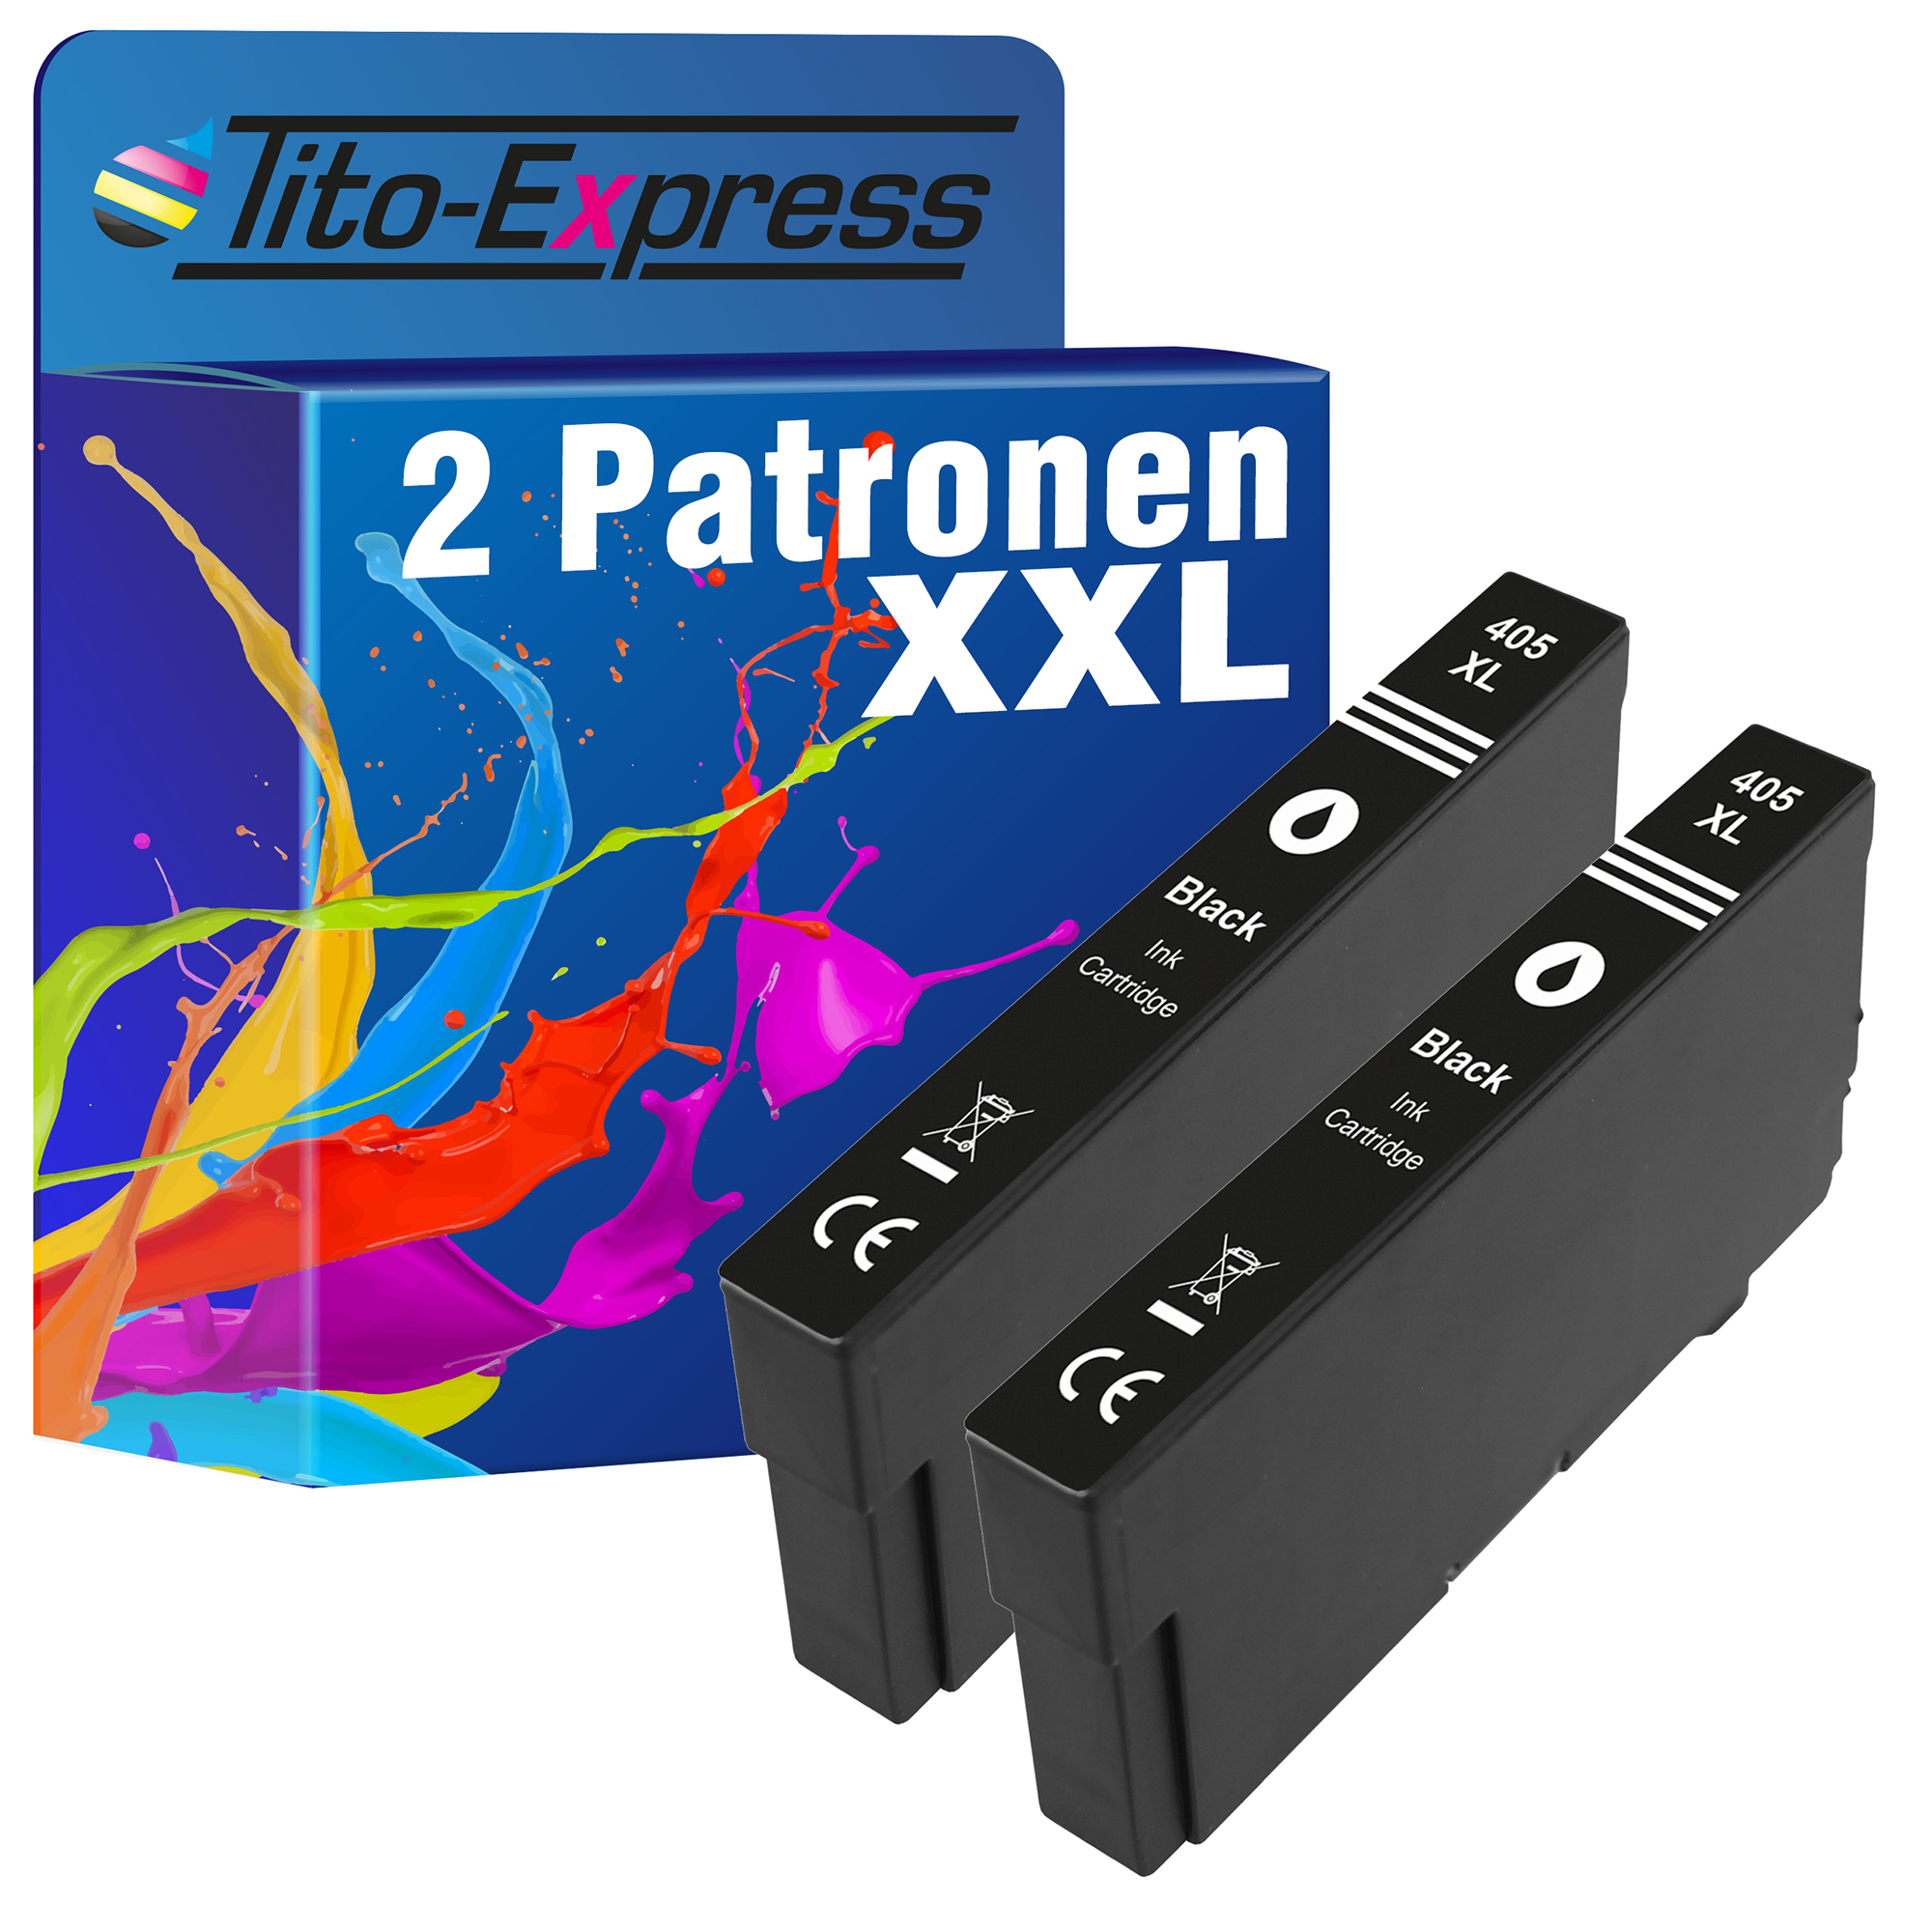 XL PLATINUMSERIE 2 TITO-EXPRESS Tintenpatronen Black 405 (C13T05H14010) Patronen Epson ersetzt